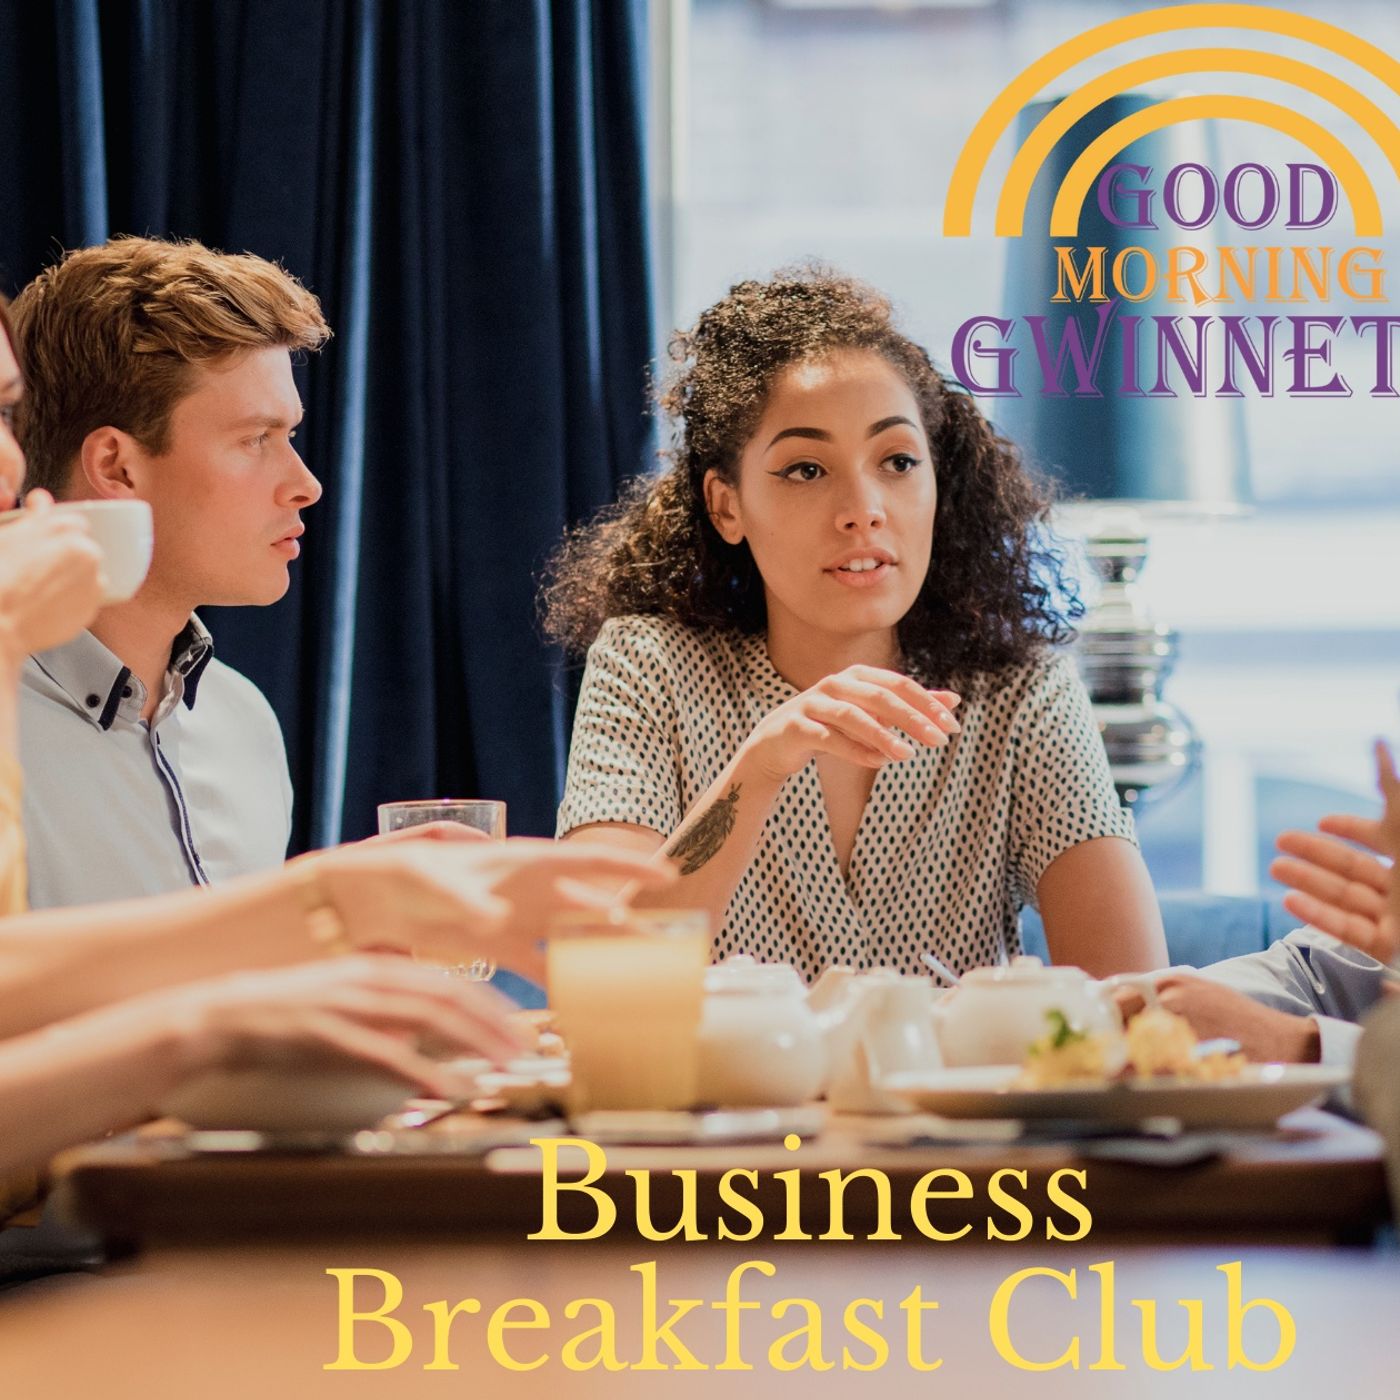 Gwinnett Business Breakfast Club Meetup Tomorrow Image